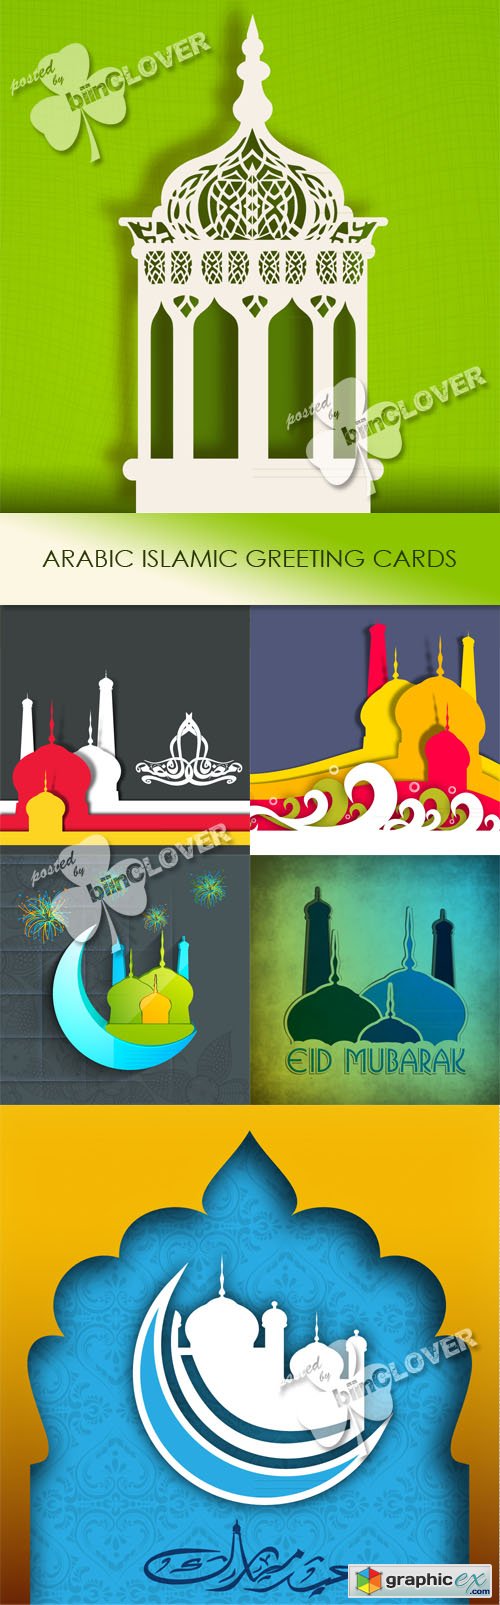 Vector Arabic Islamic greeting cards 0454